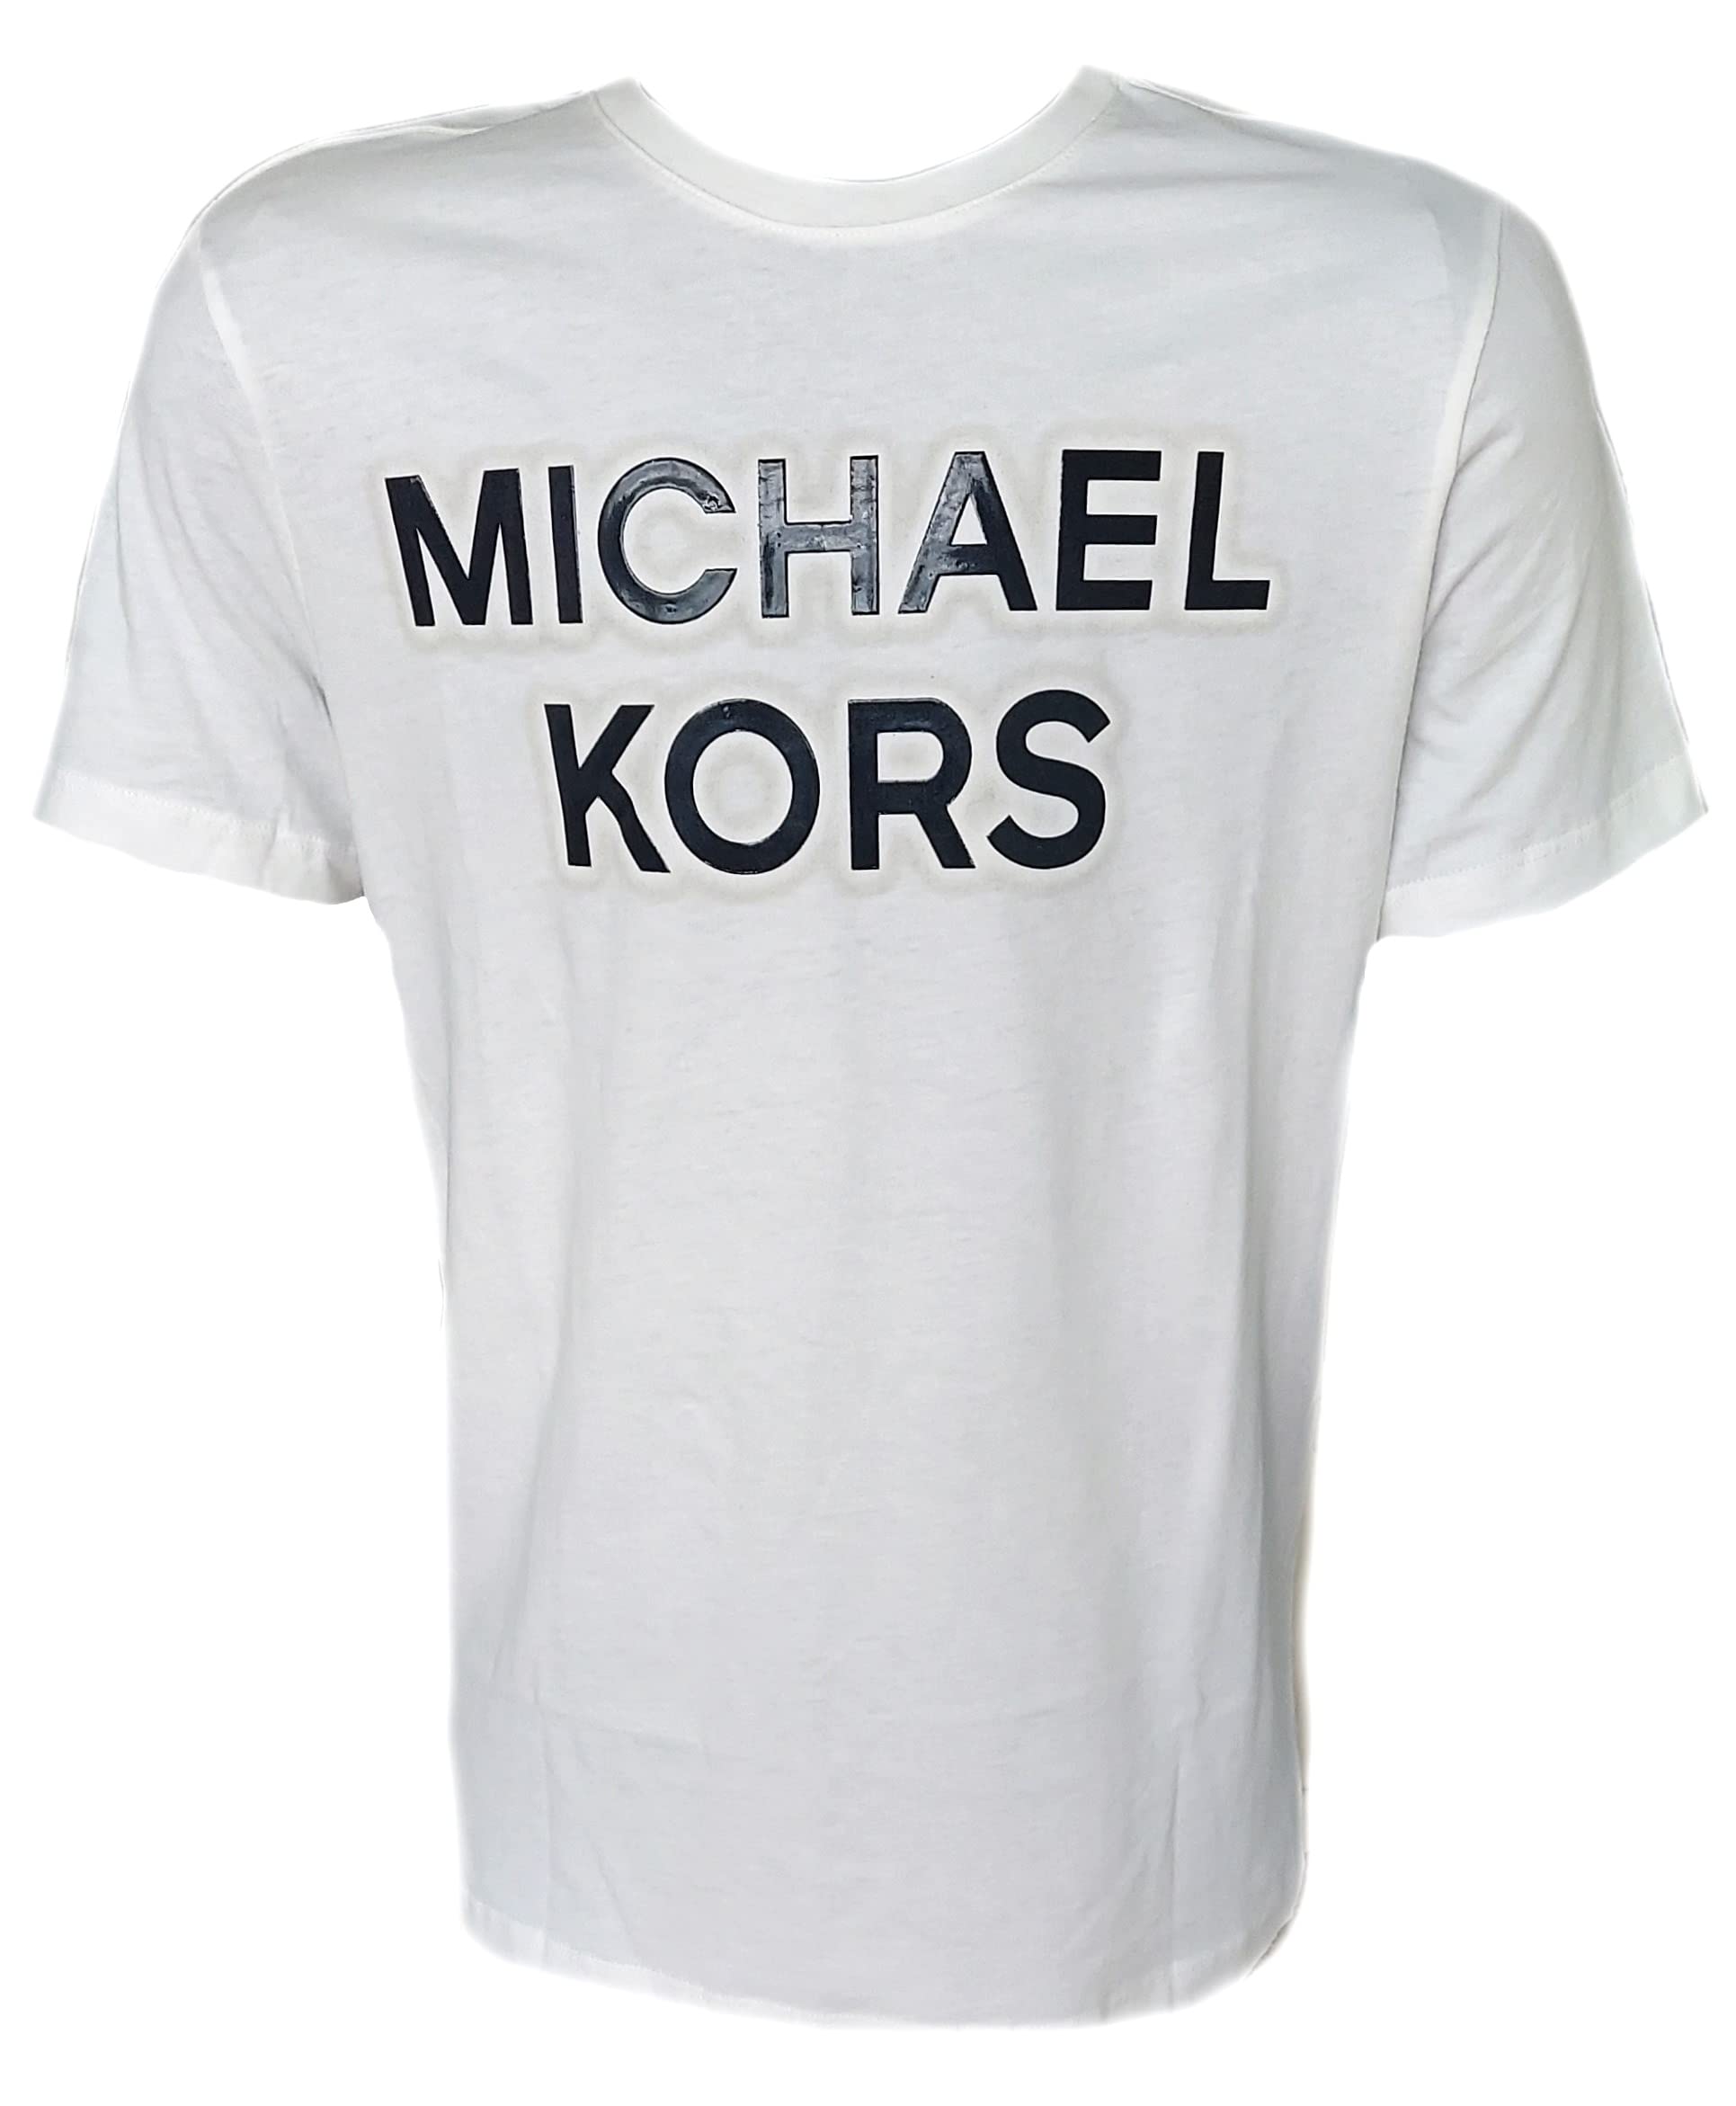 Michael Kors Outlet tshirt for man  Black  Michael Kors tshirt  CF2516N1V2 online on GIGLIOCOM